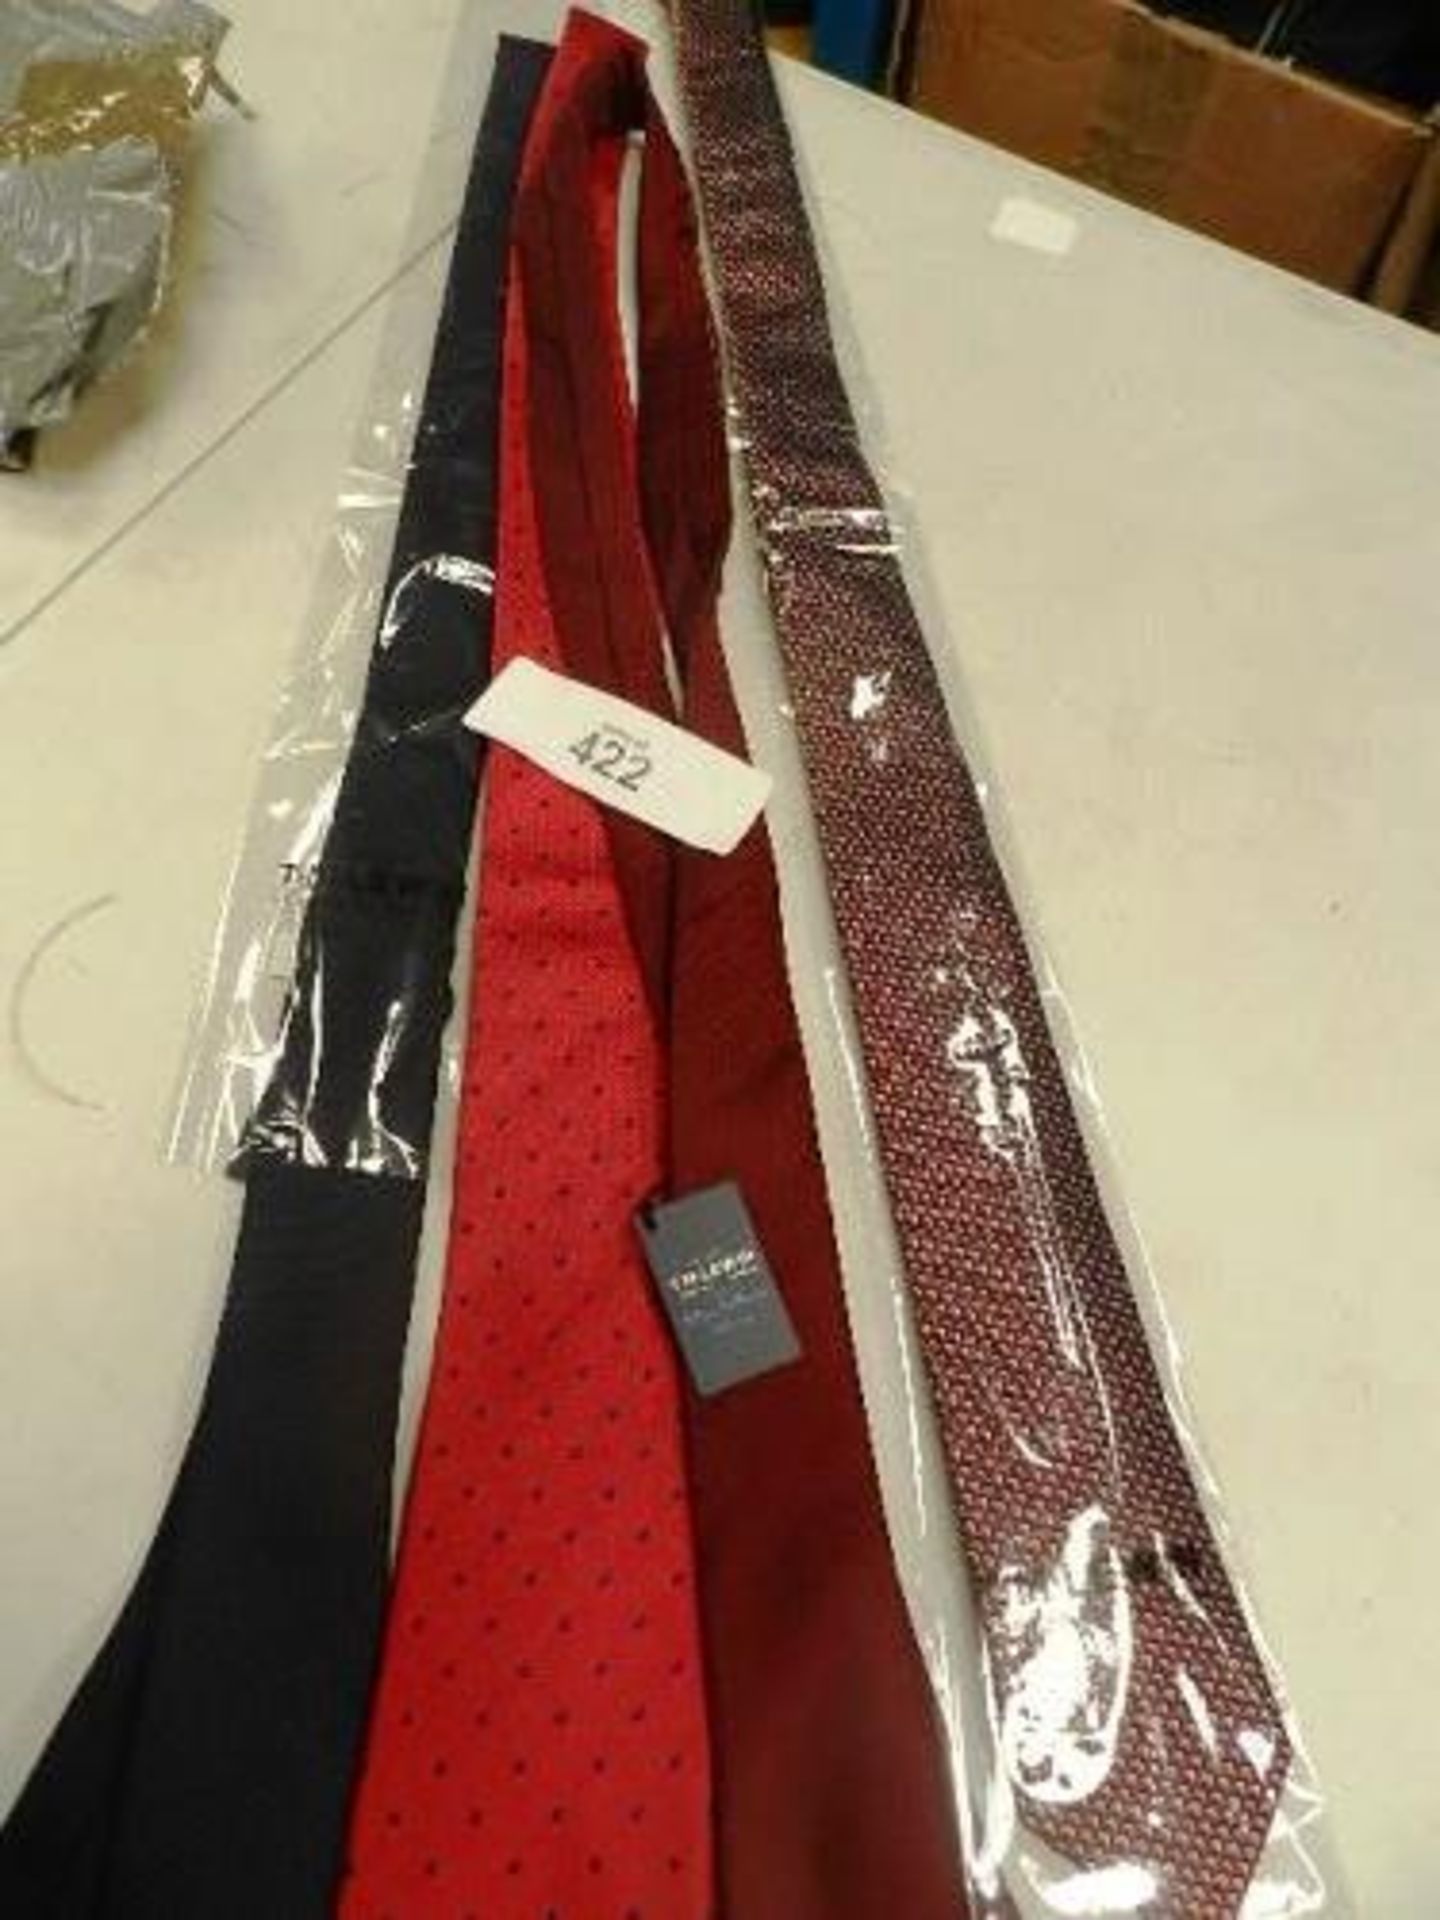 4 x T.M. Lewin men's ties, RRP £29.95 each - New (ES15A)